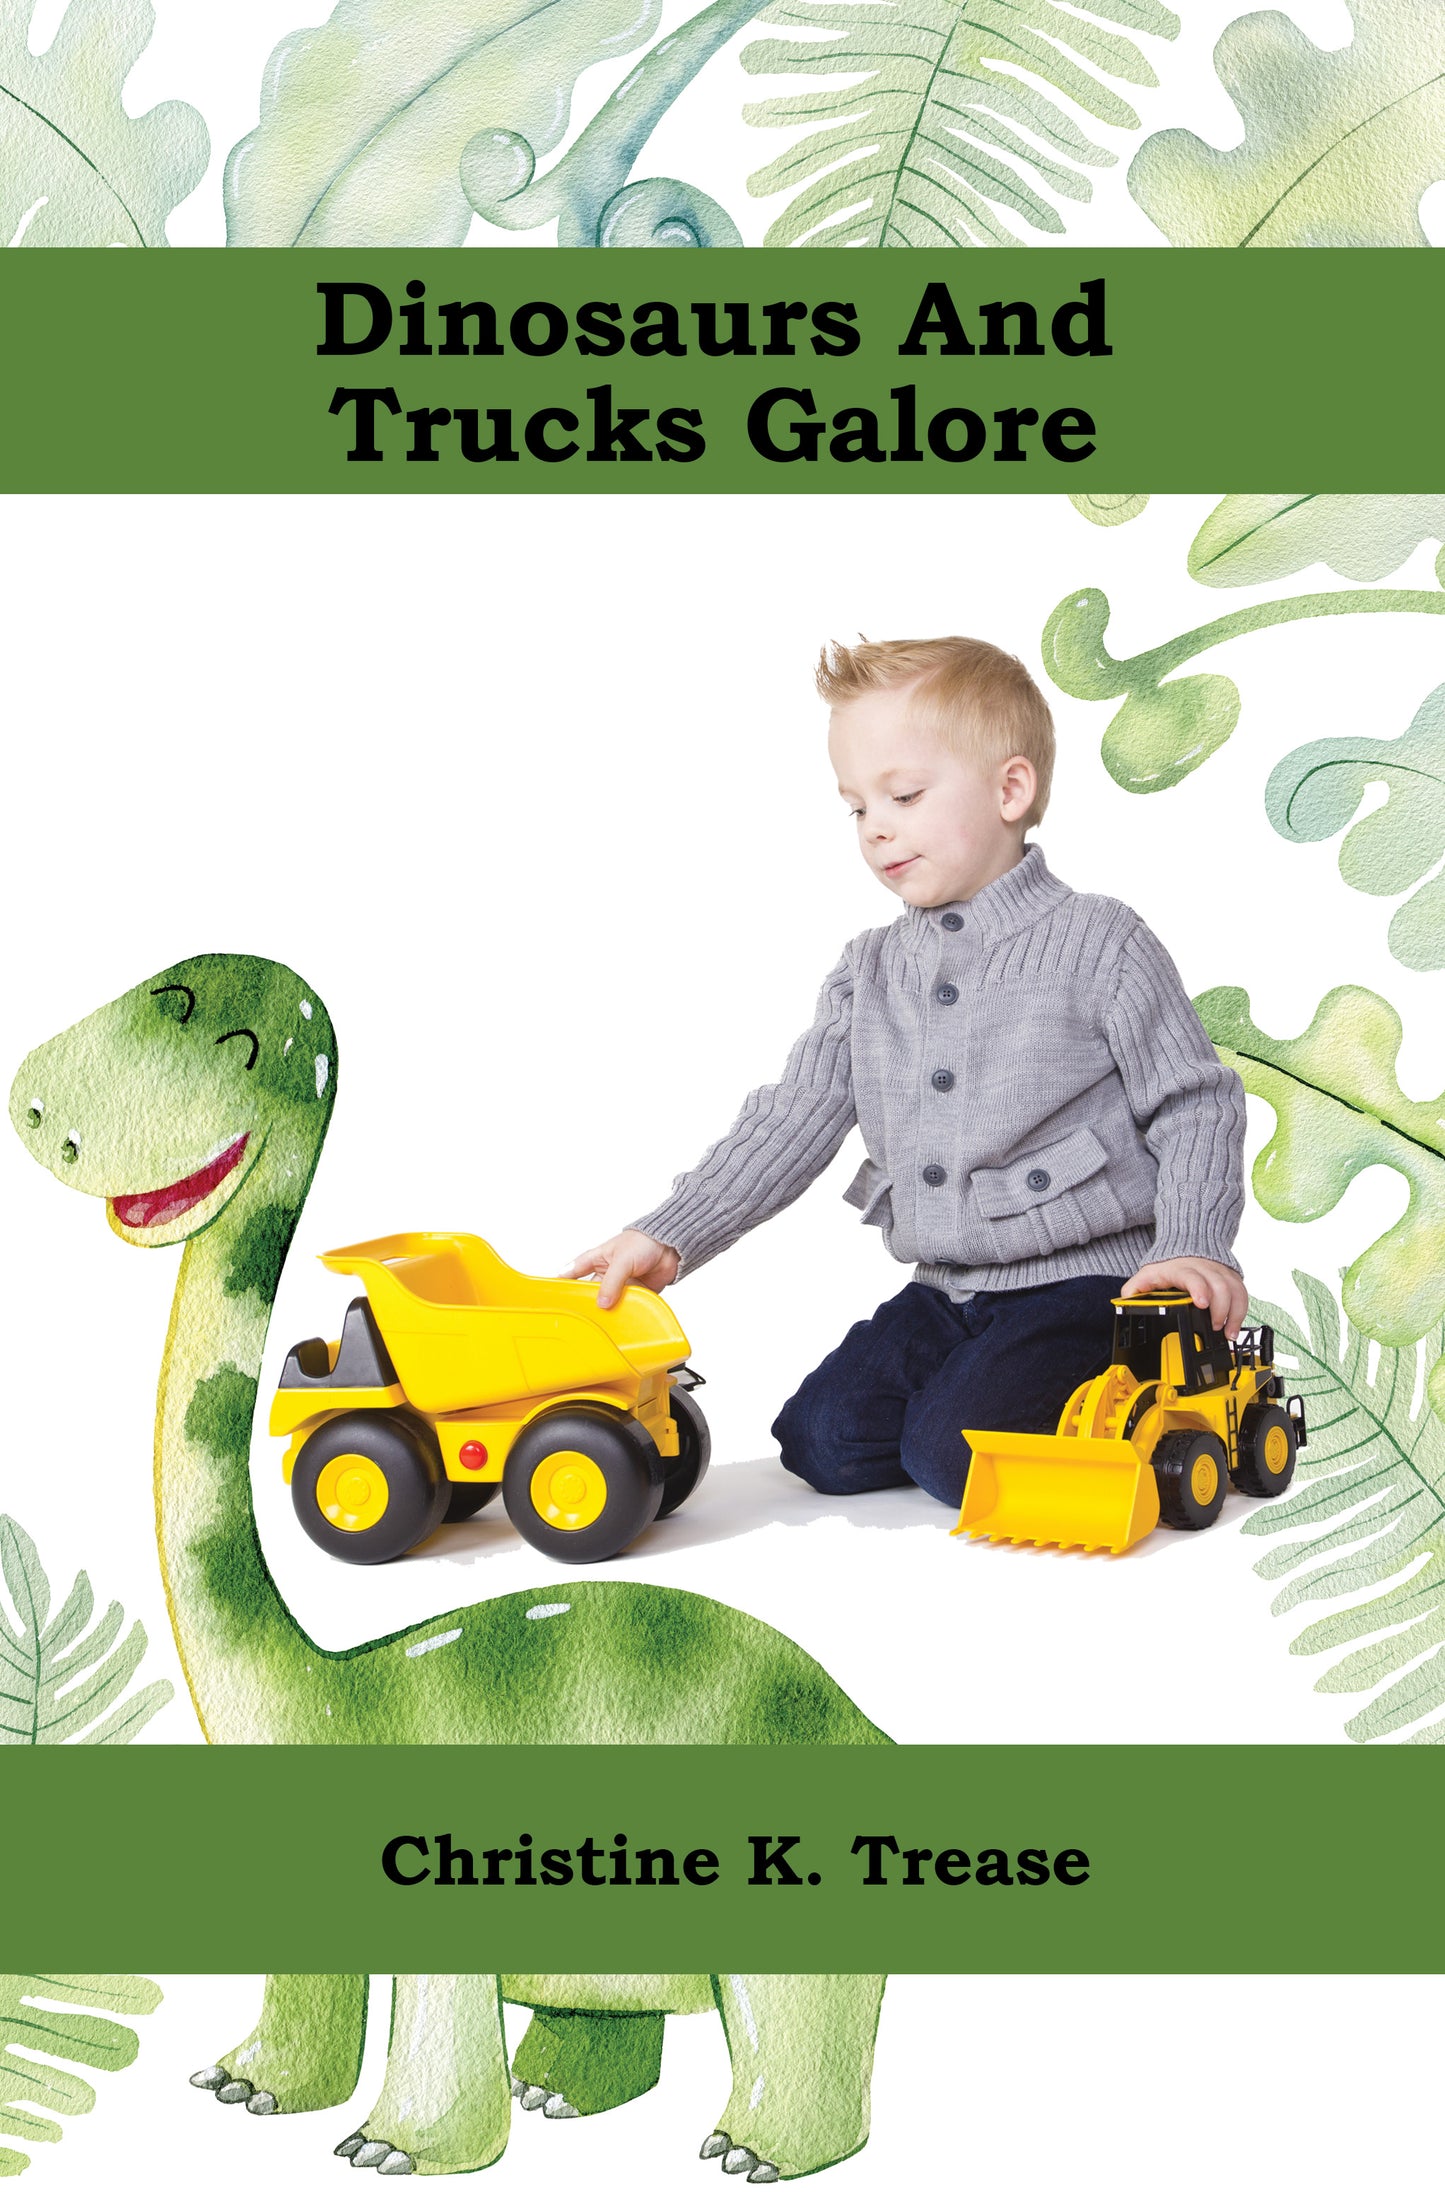 Book Children's-Dinosaurs And Trucks Galore